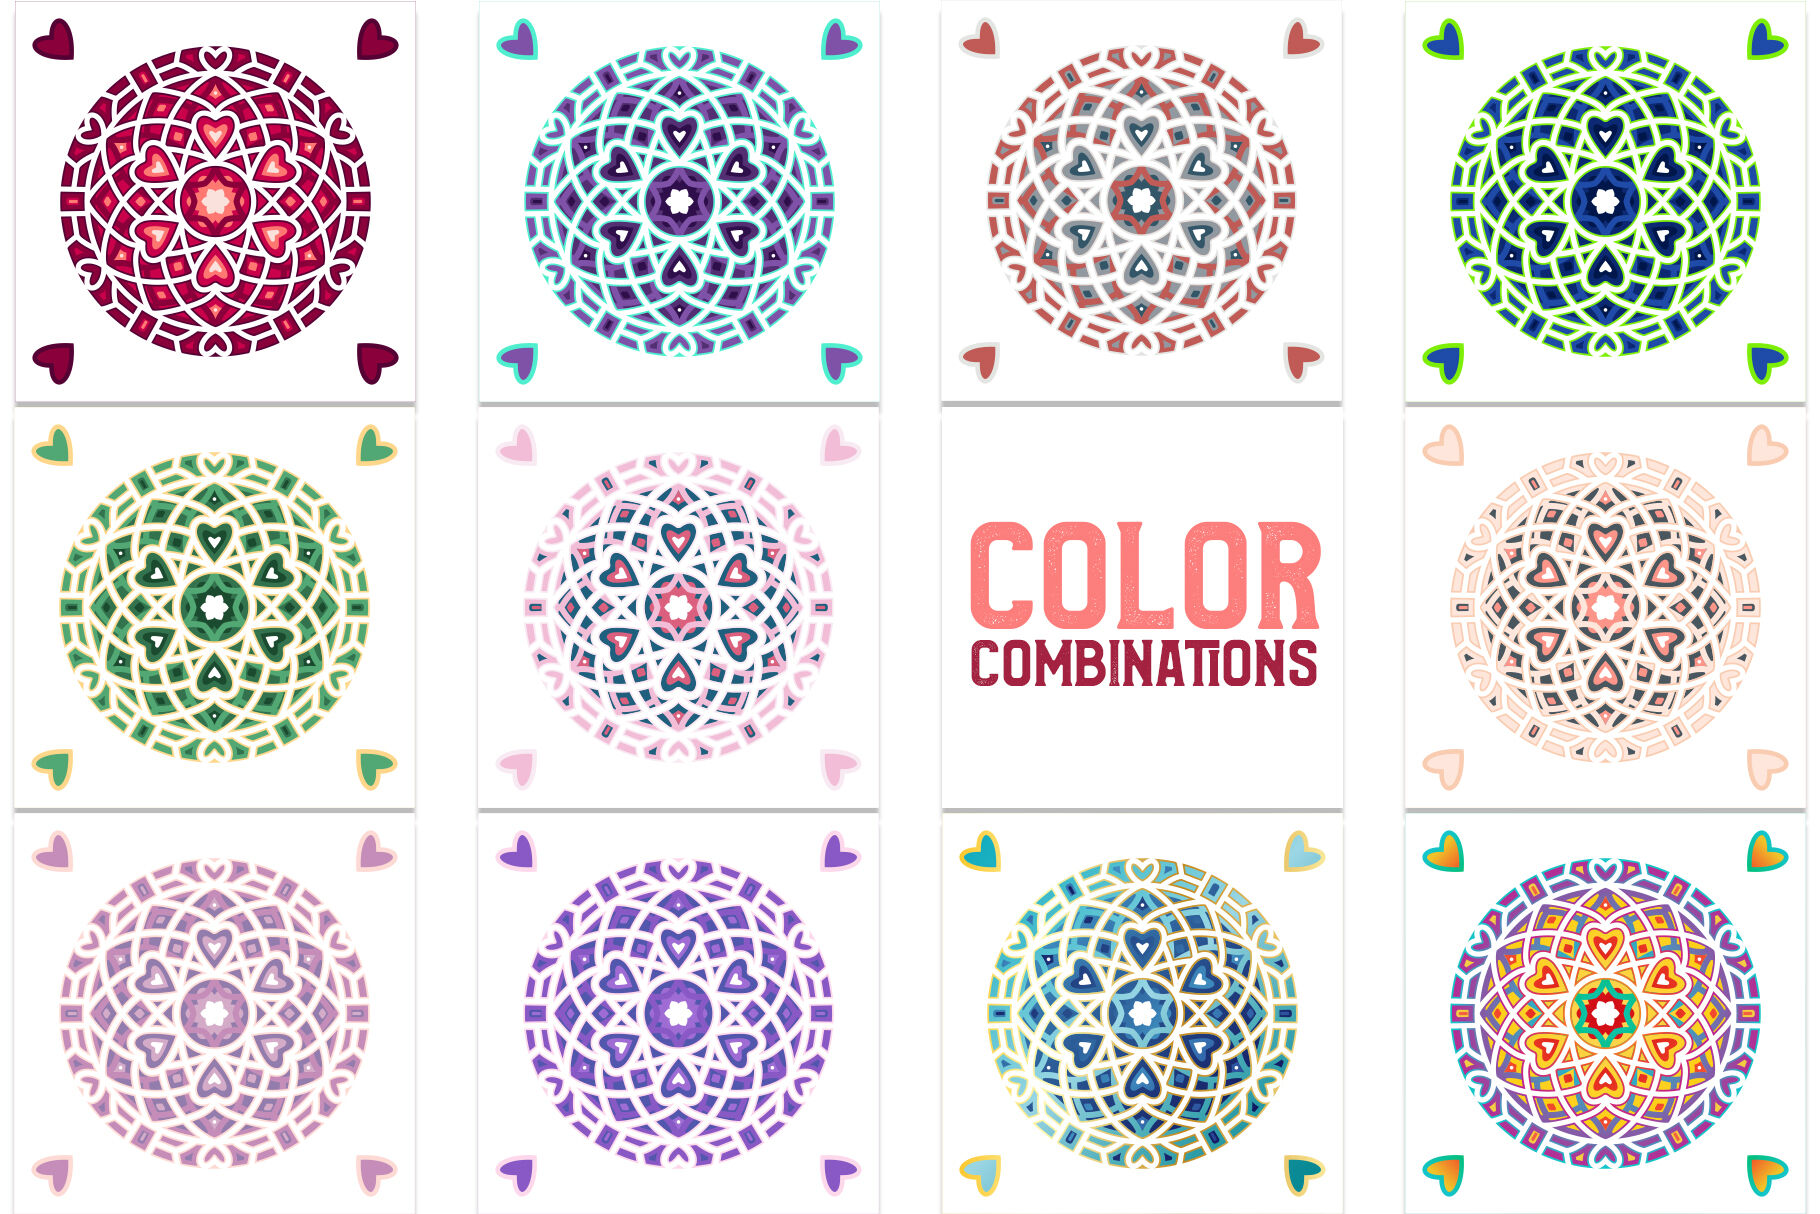 Layered 3D Love Mandala SVG Cut File By Pixaroma | TheHungryJPEG.com